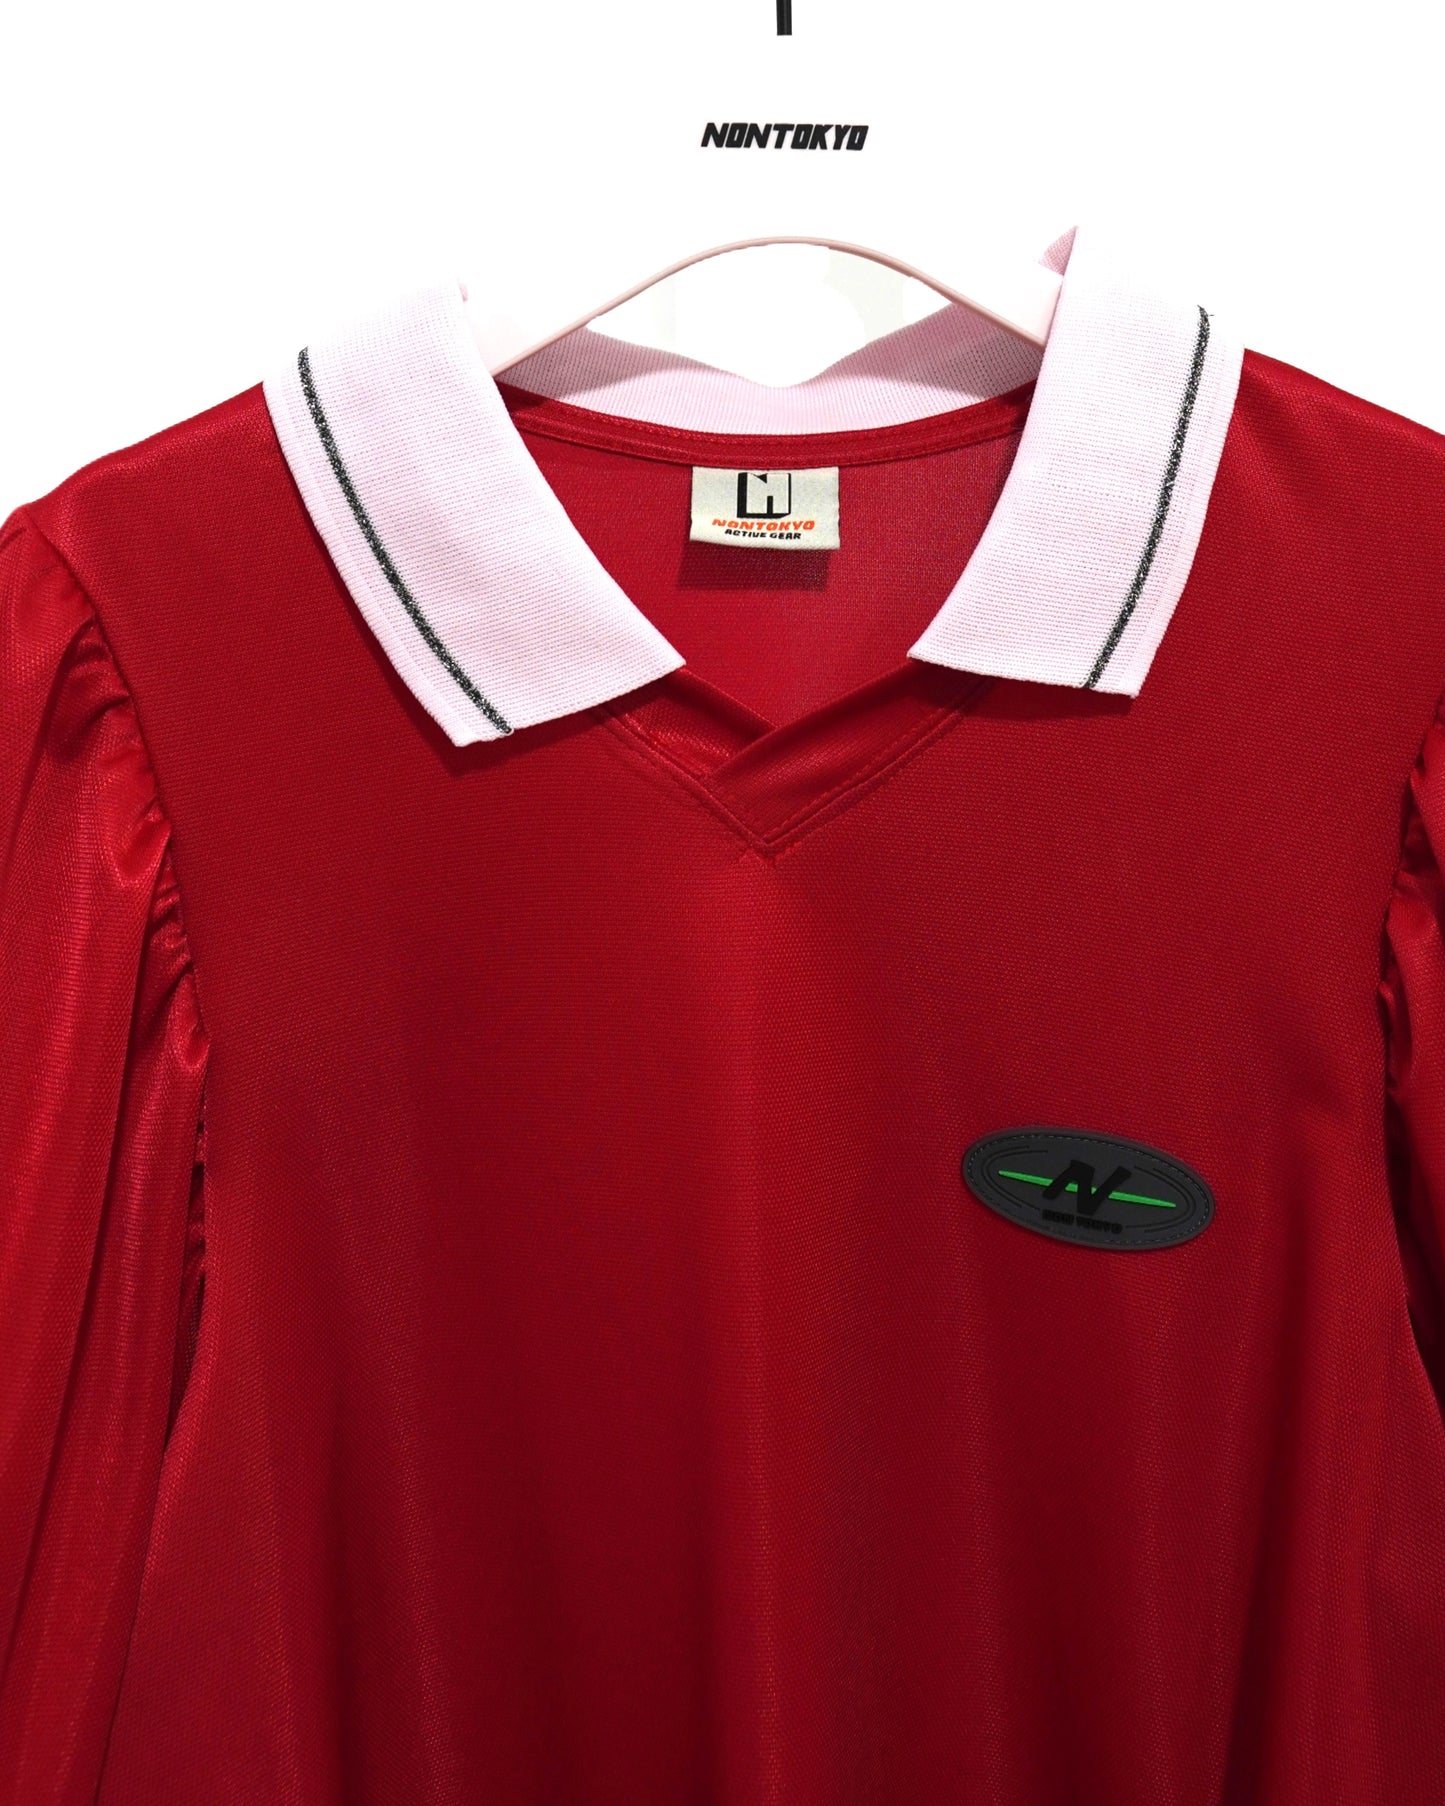 NON TOKYO /  FLARE SLEEVE SOCCER SHIRT (RED) / 〈ノントーキョー〉フレアスリーブシアサッカーシャツ (レッド)